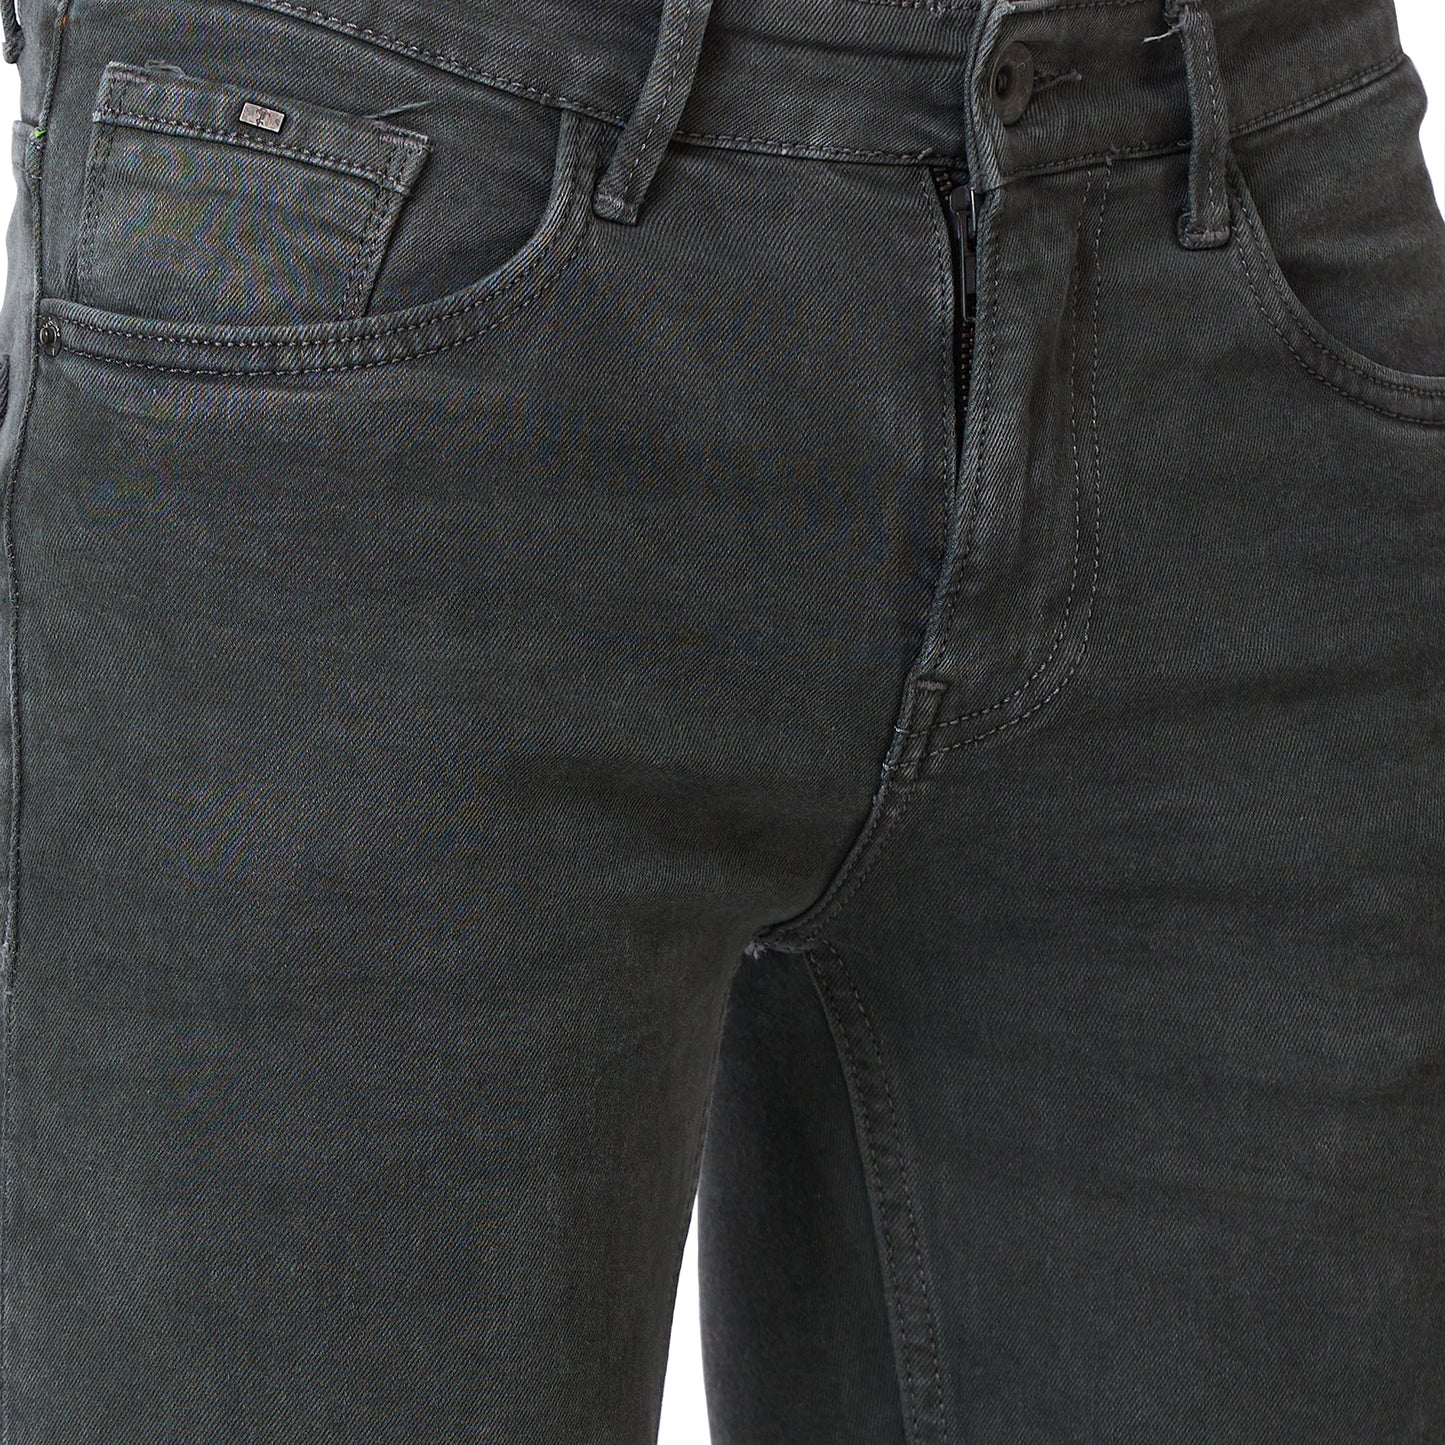 Slim Fit Stretchable Bootcut Denim Jeans